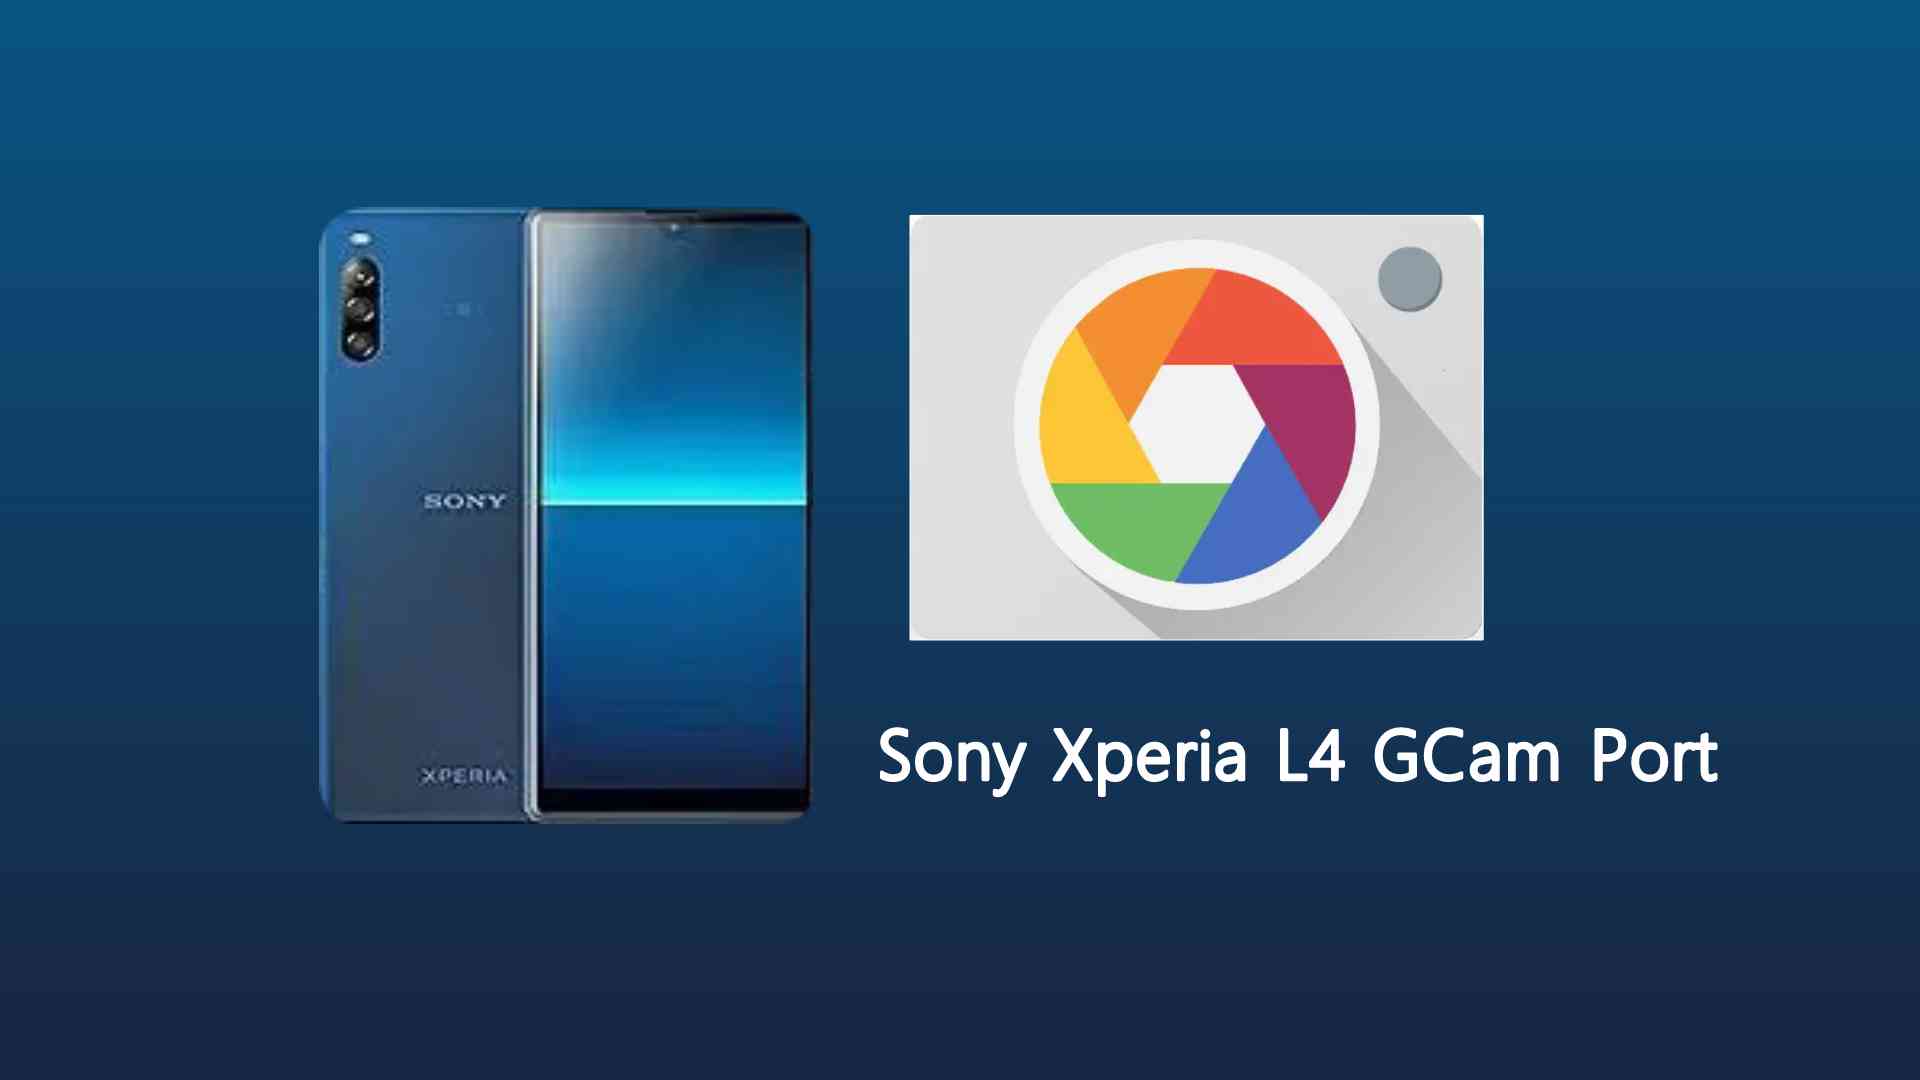 Sony Xperia L4 GCam Port